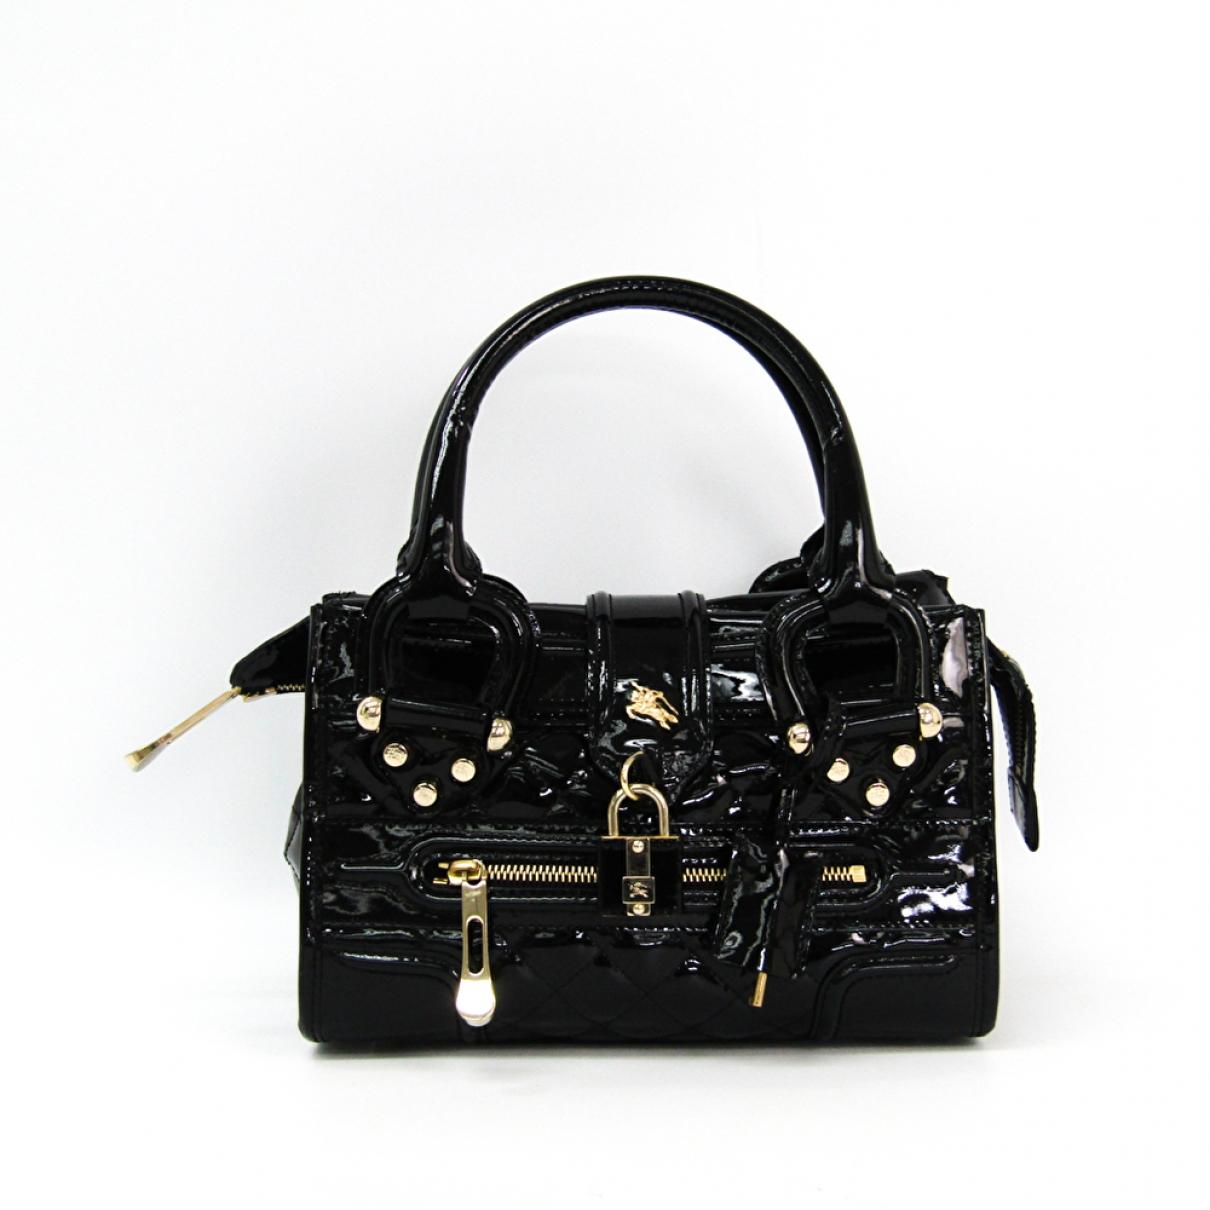 Burberry Black Patent Leather Handbag in Black - Lyst